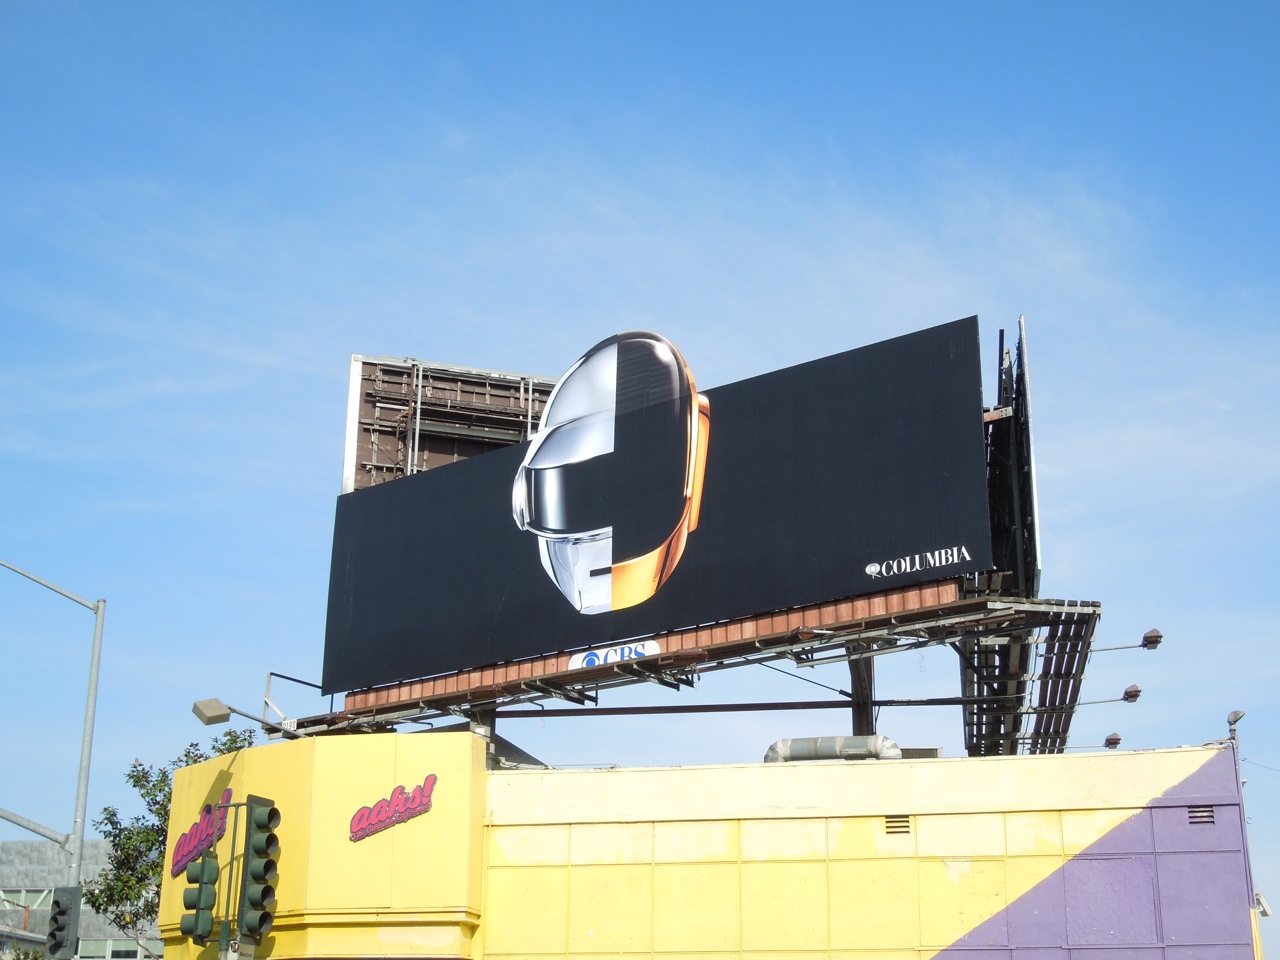 Image of a billboard promoting Daft Punk's album Random Access Memories